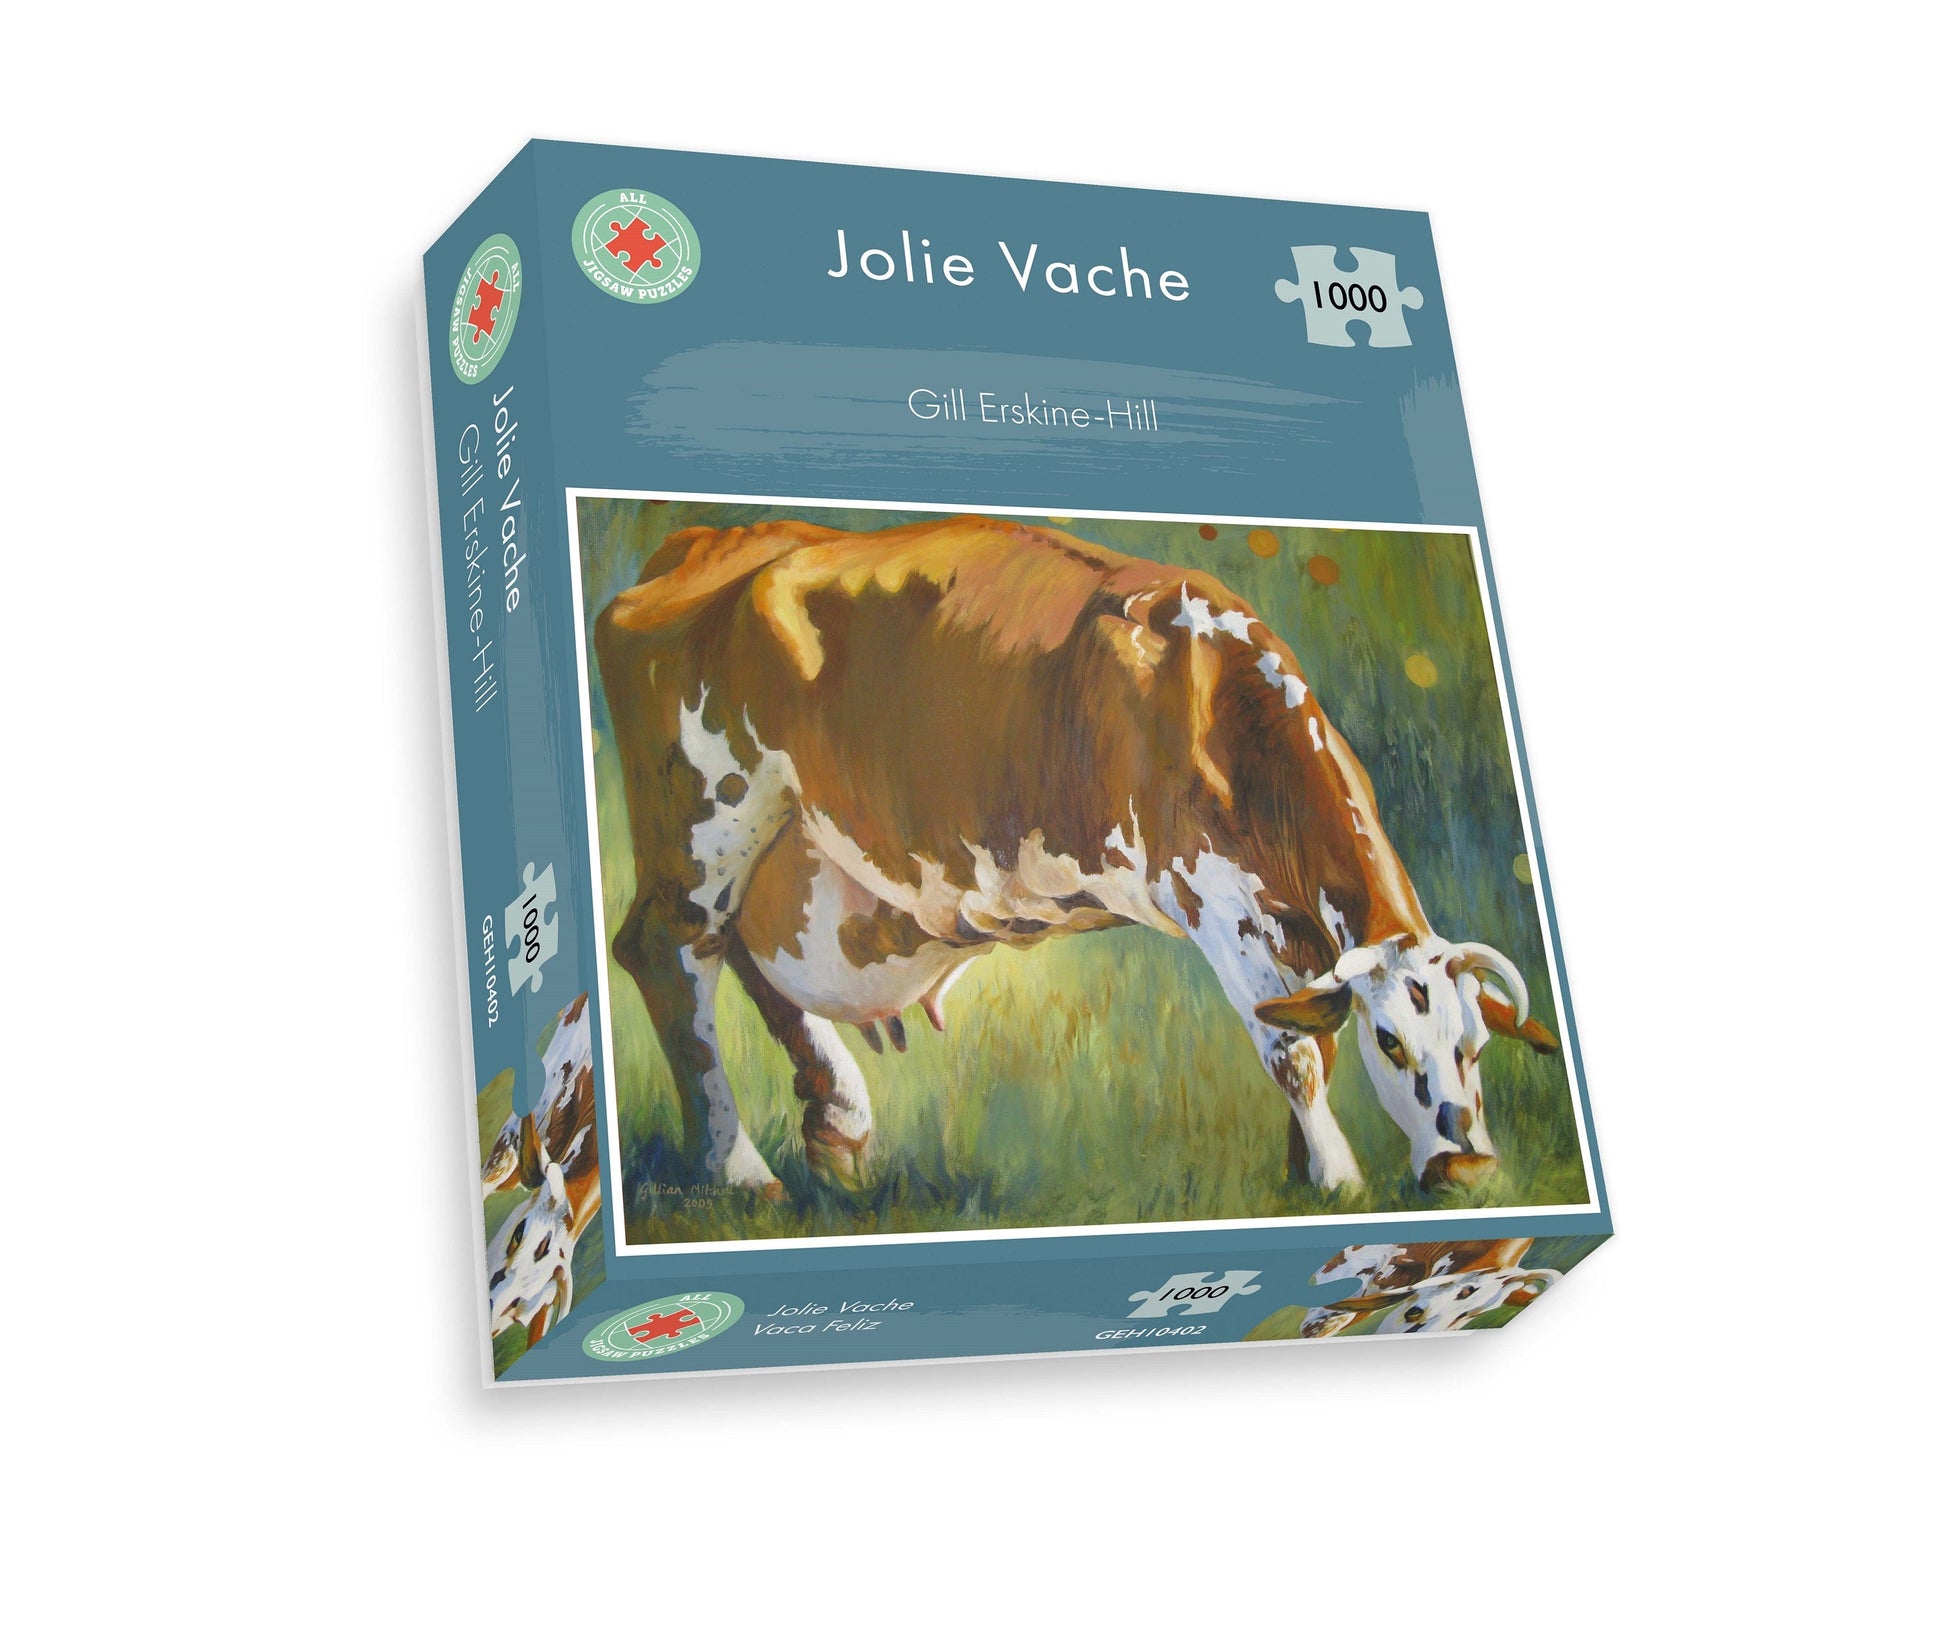 Jolie Vache, 1000 Piece Jigsaw Puzzle box